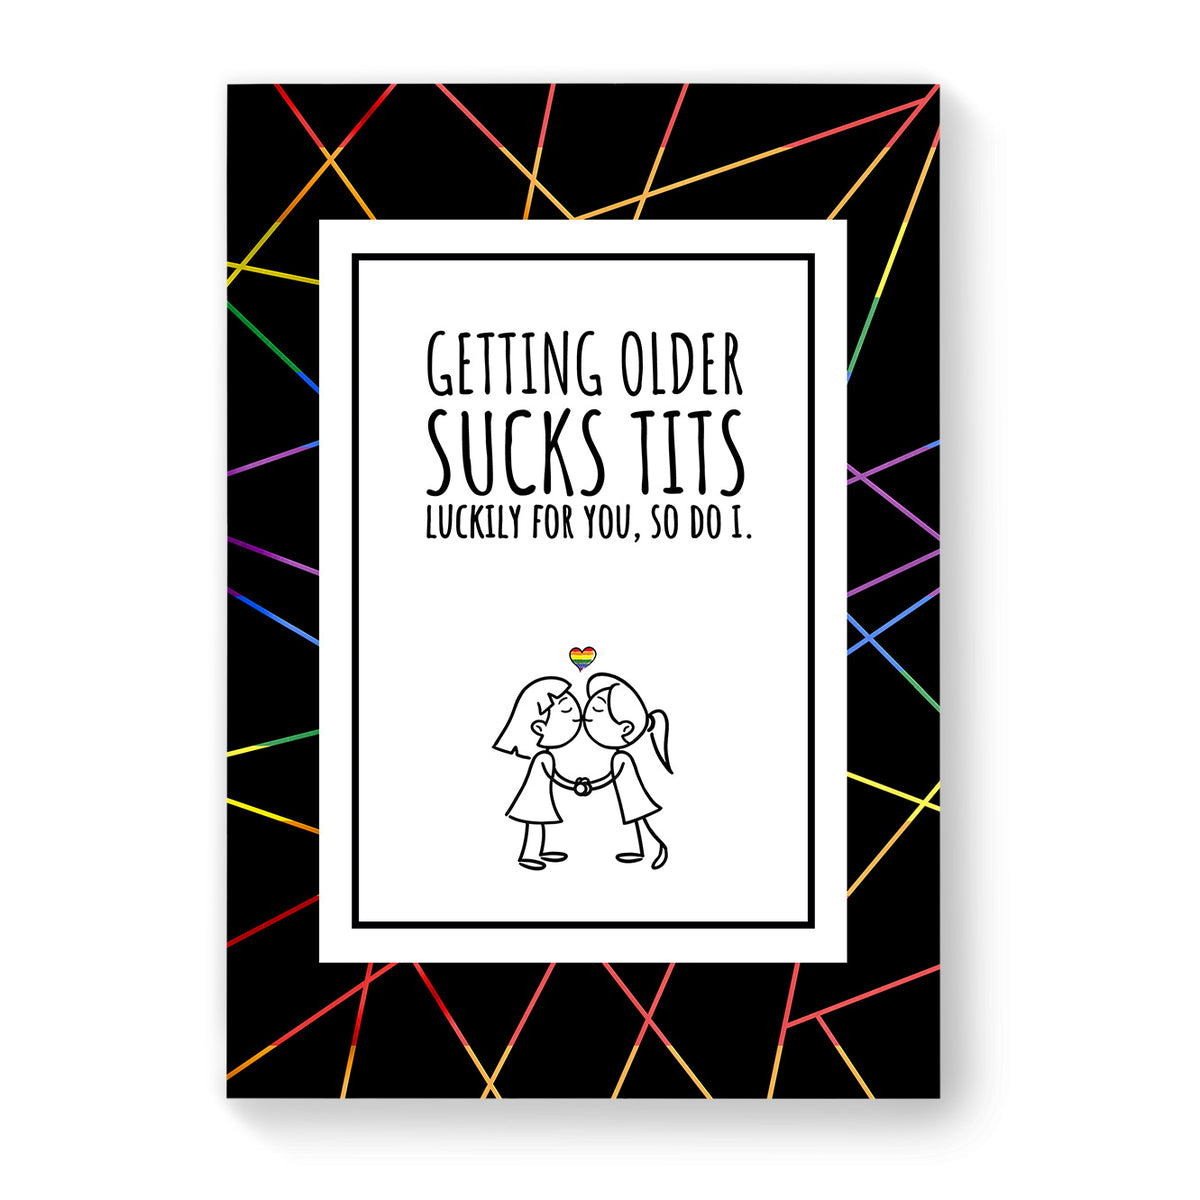 Getting older sucks tits - Lesbian Gay Birthday Card - Black Geometric | Gift